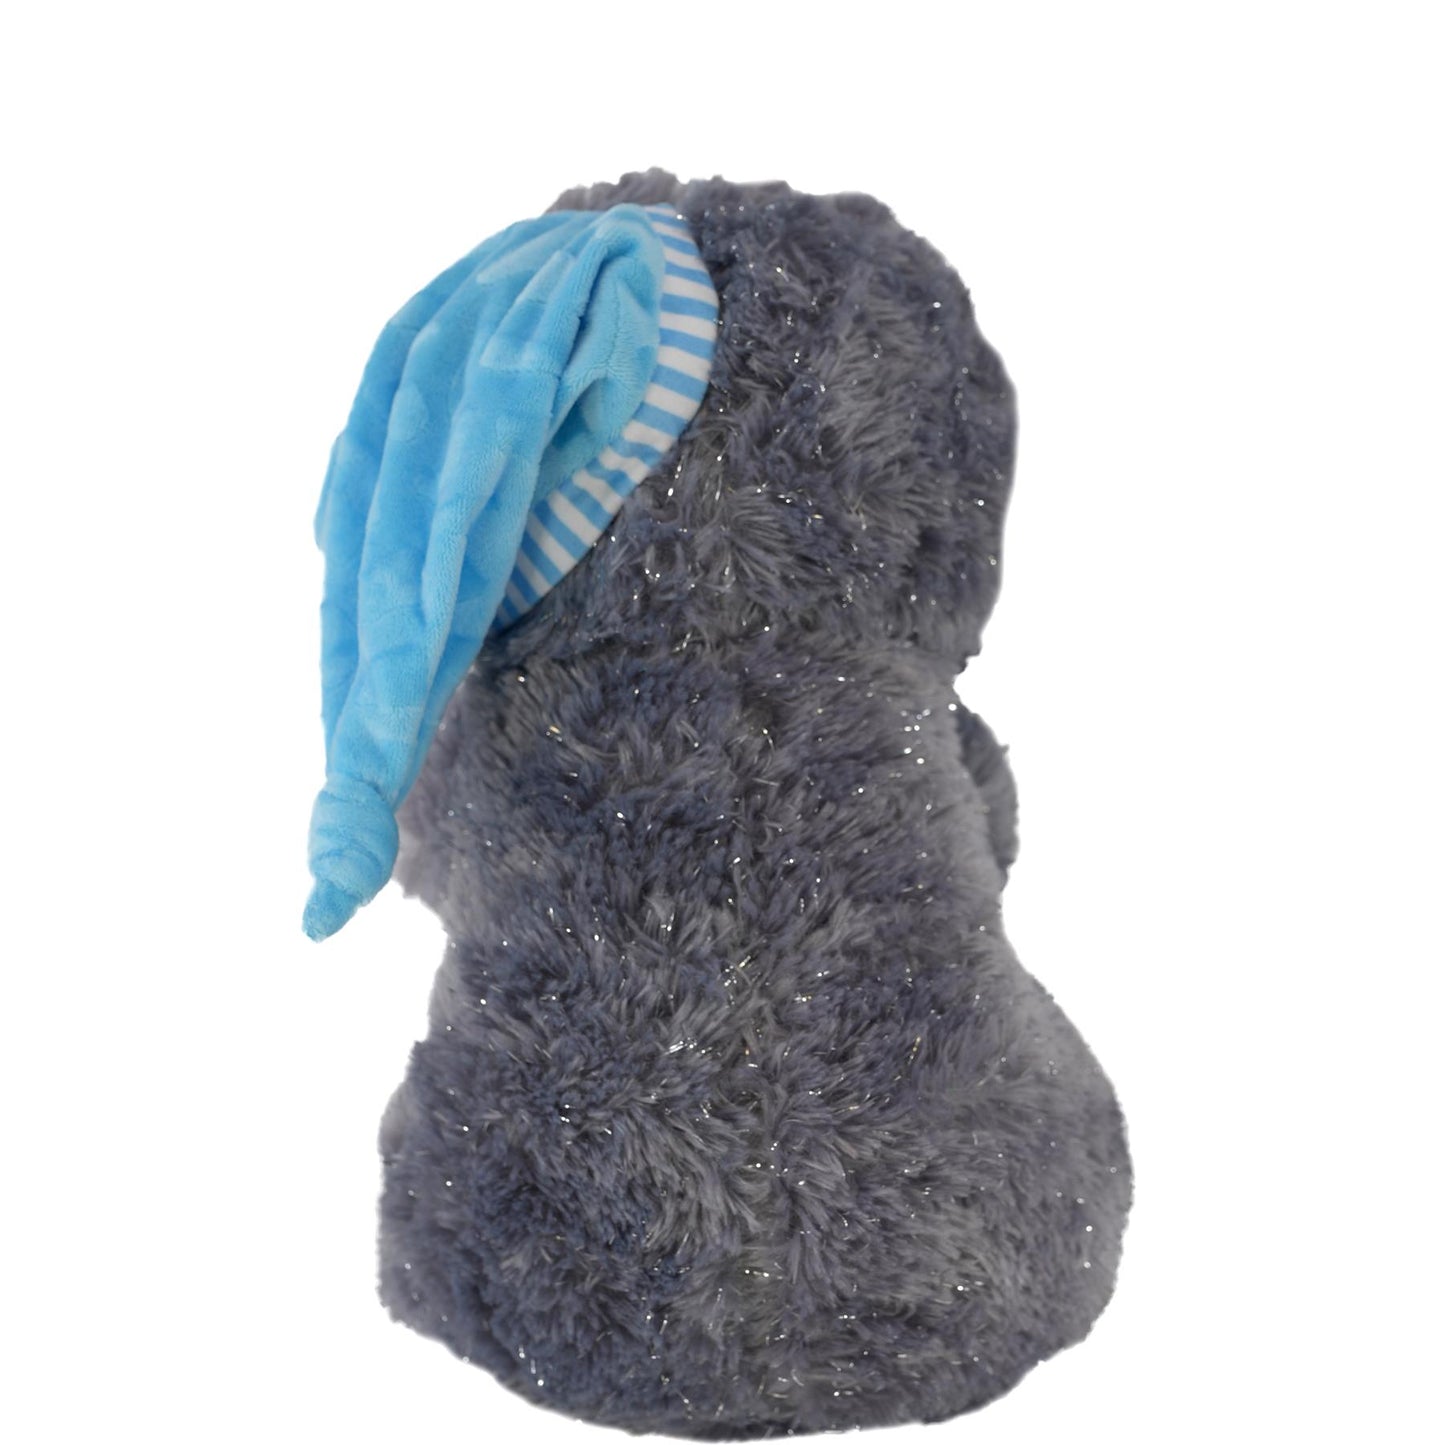 Sloth Plush Toy Stuffed Animal  Baby Gift Blue by The Magic Toy Shop - UKBuyZone